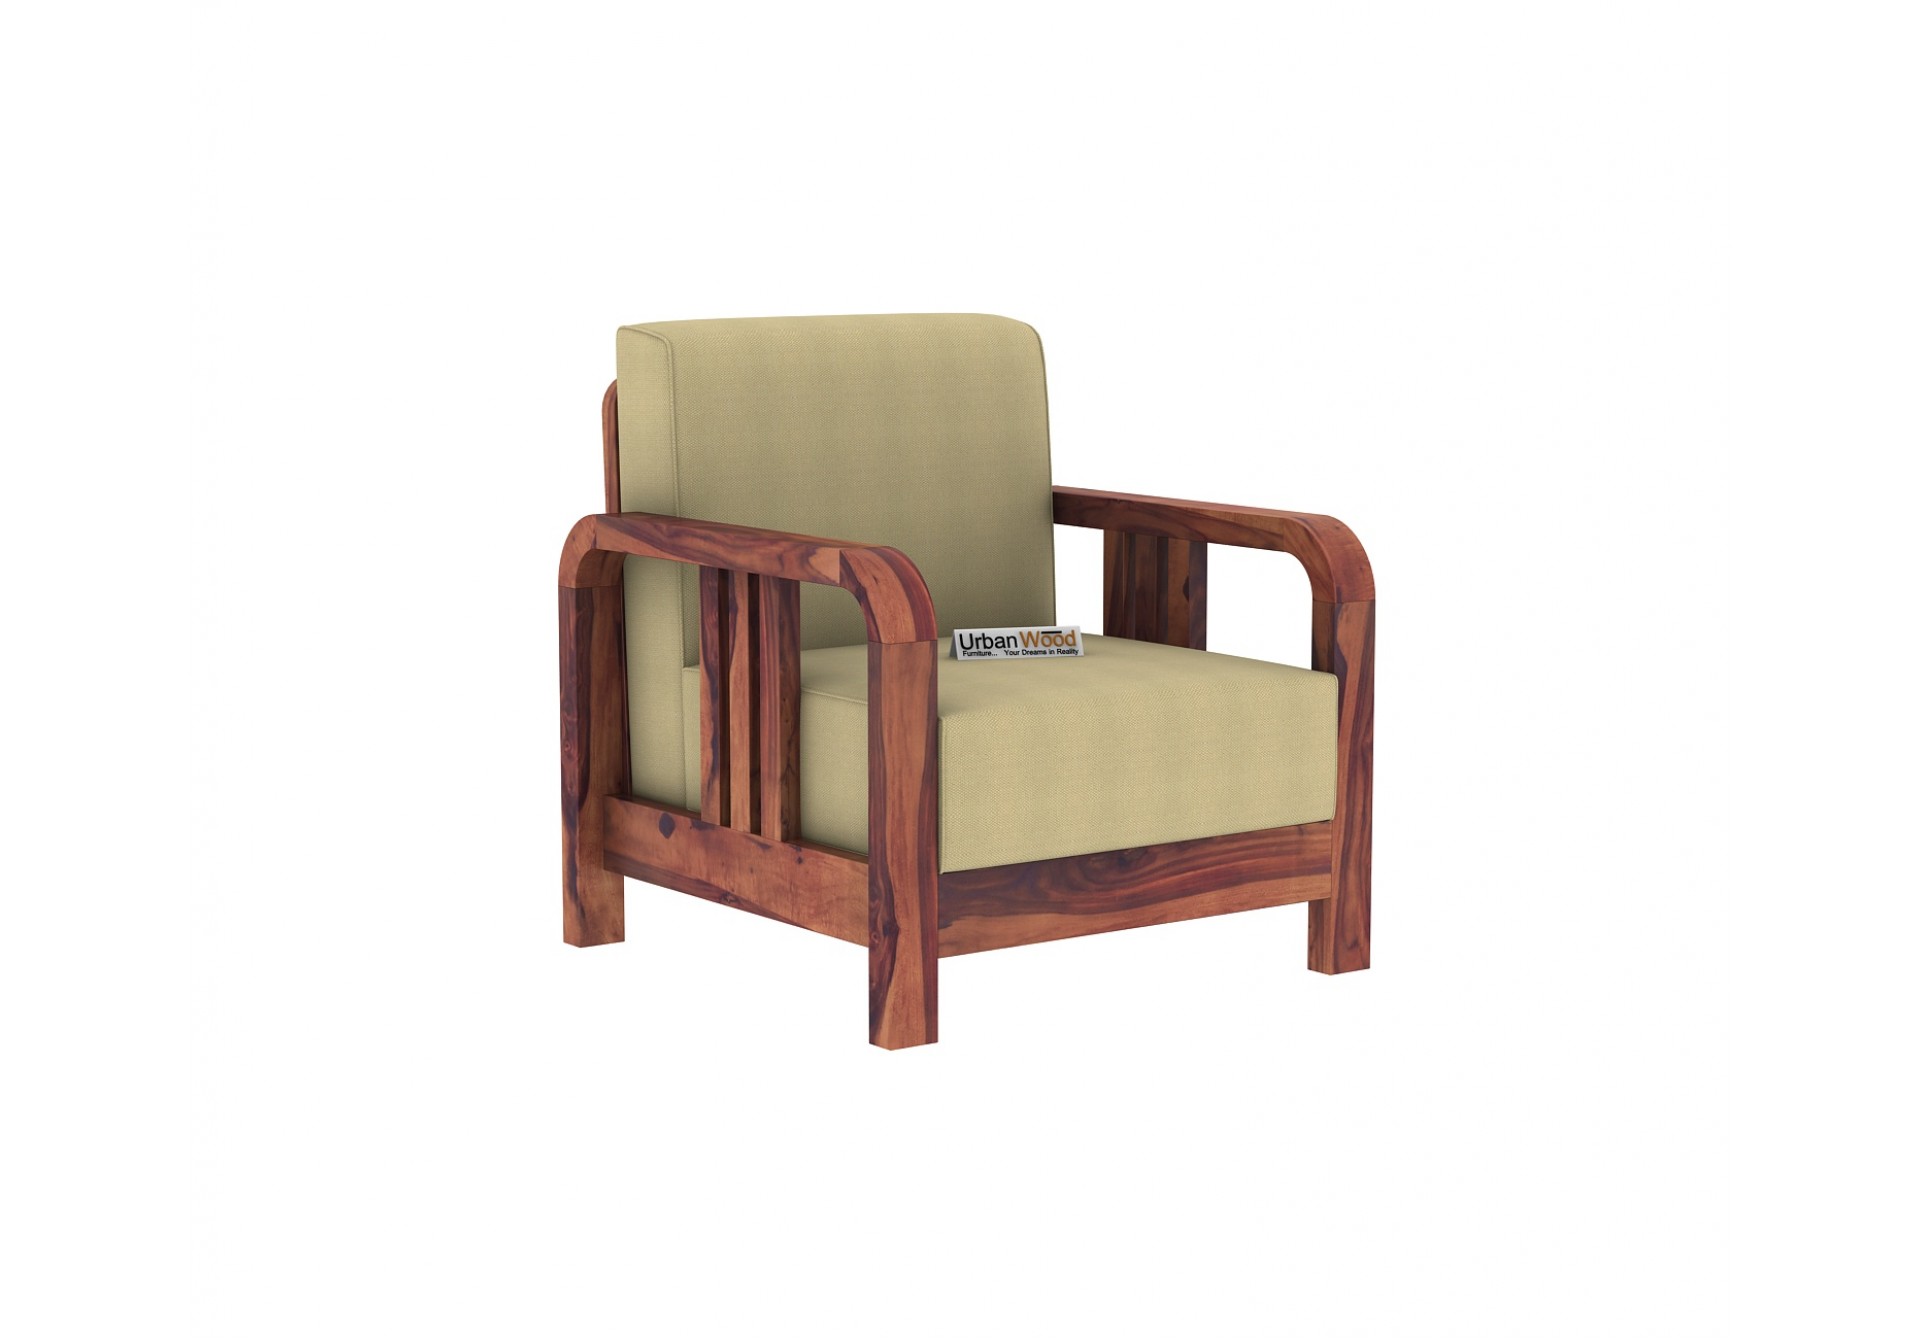 HomeBregg Wooden Sofa Set 3+1+1 Seater 